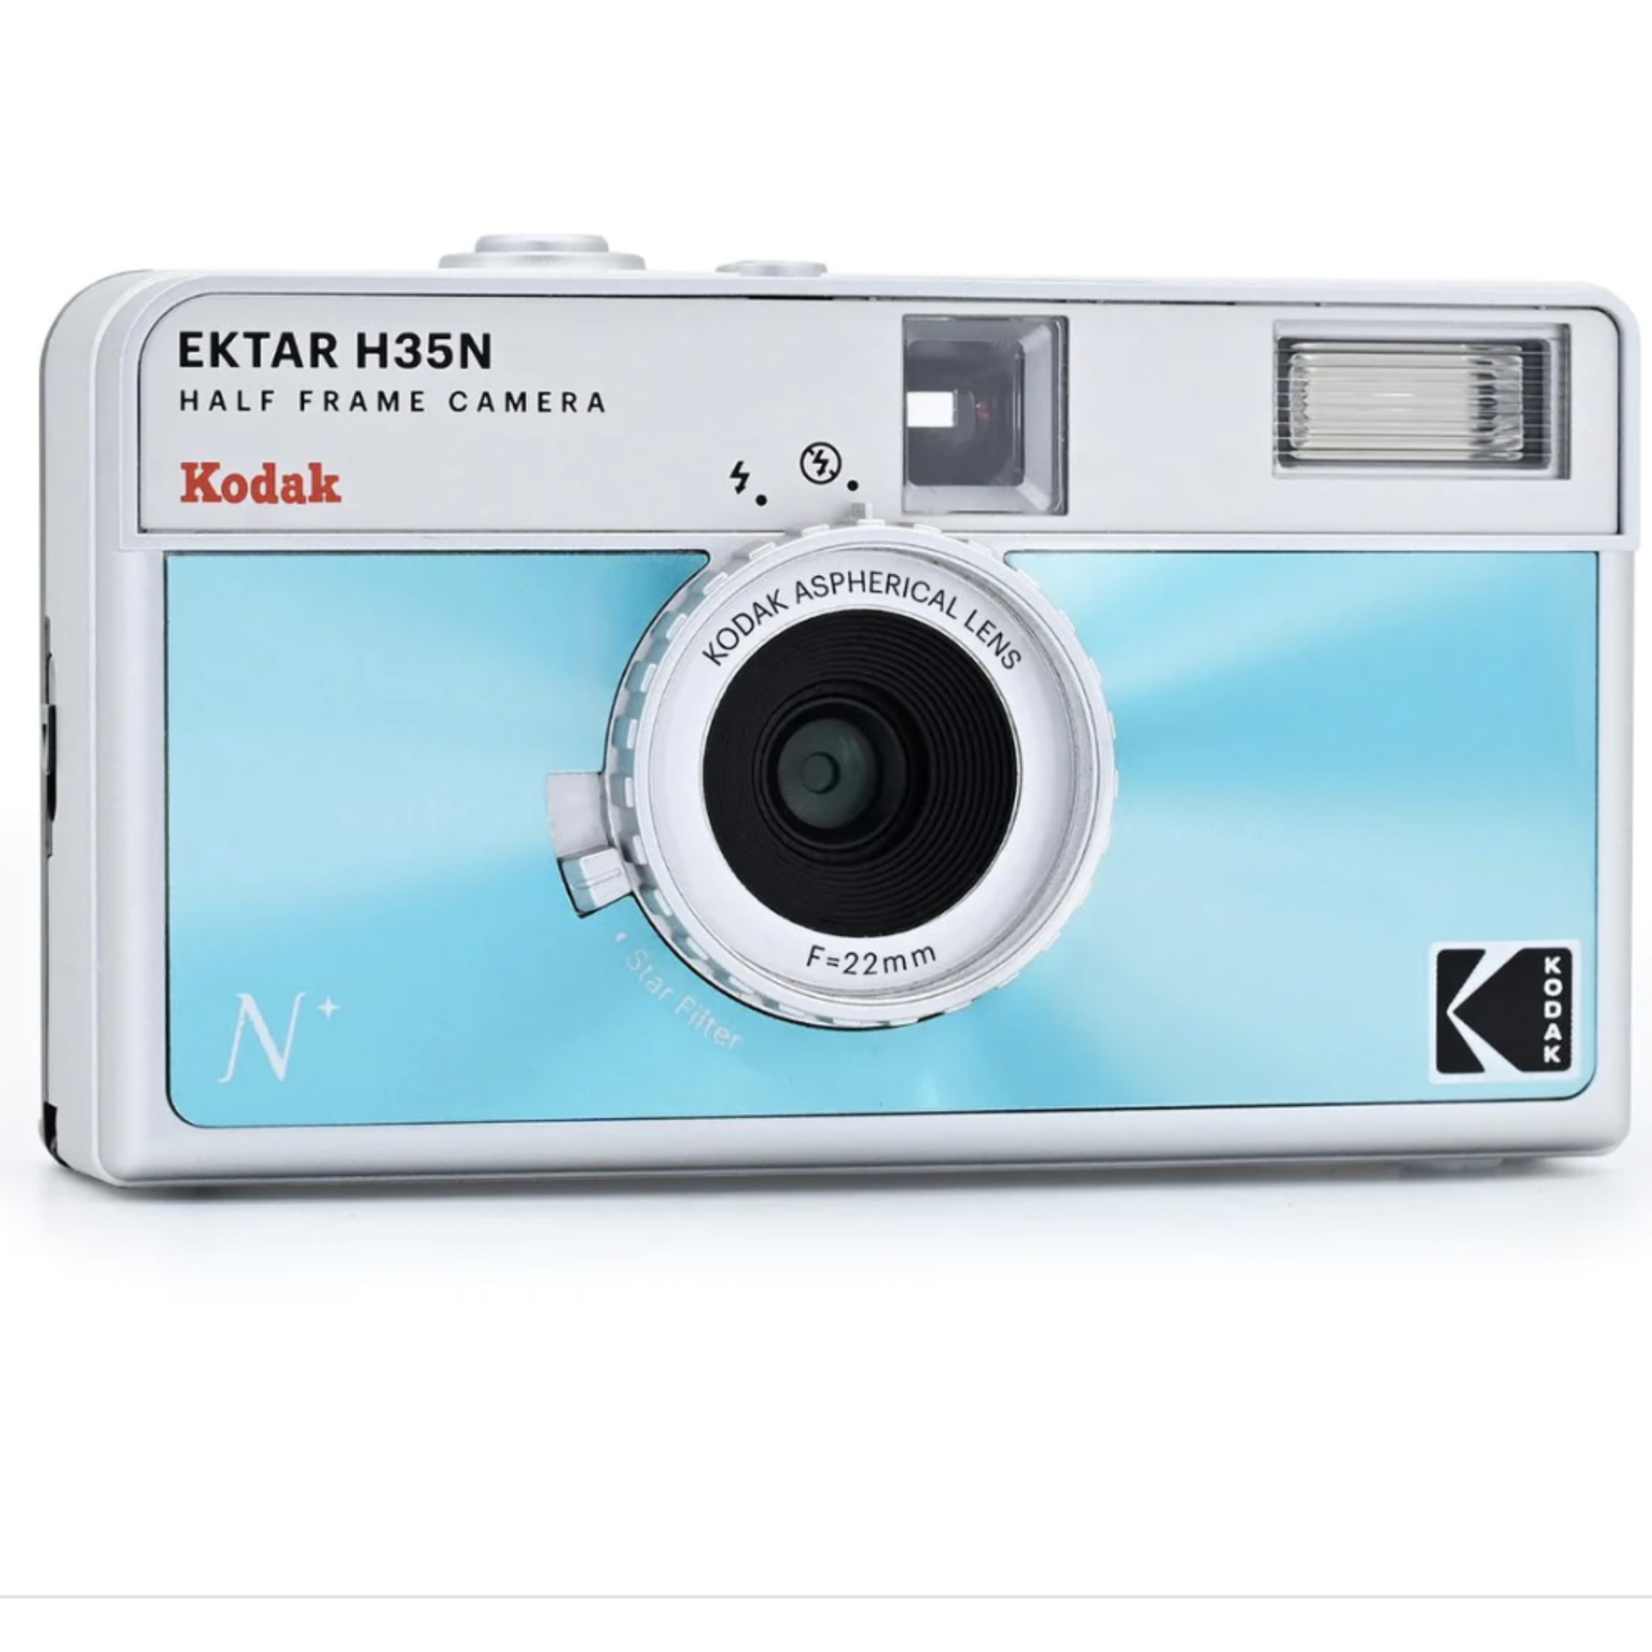 Hard Carrying Case for KODAK EKTAR H35 Half Frame Film Camera(Case